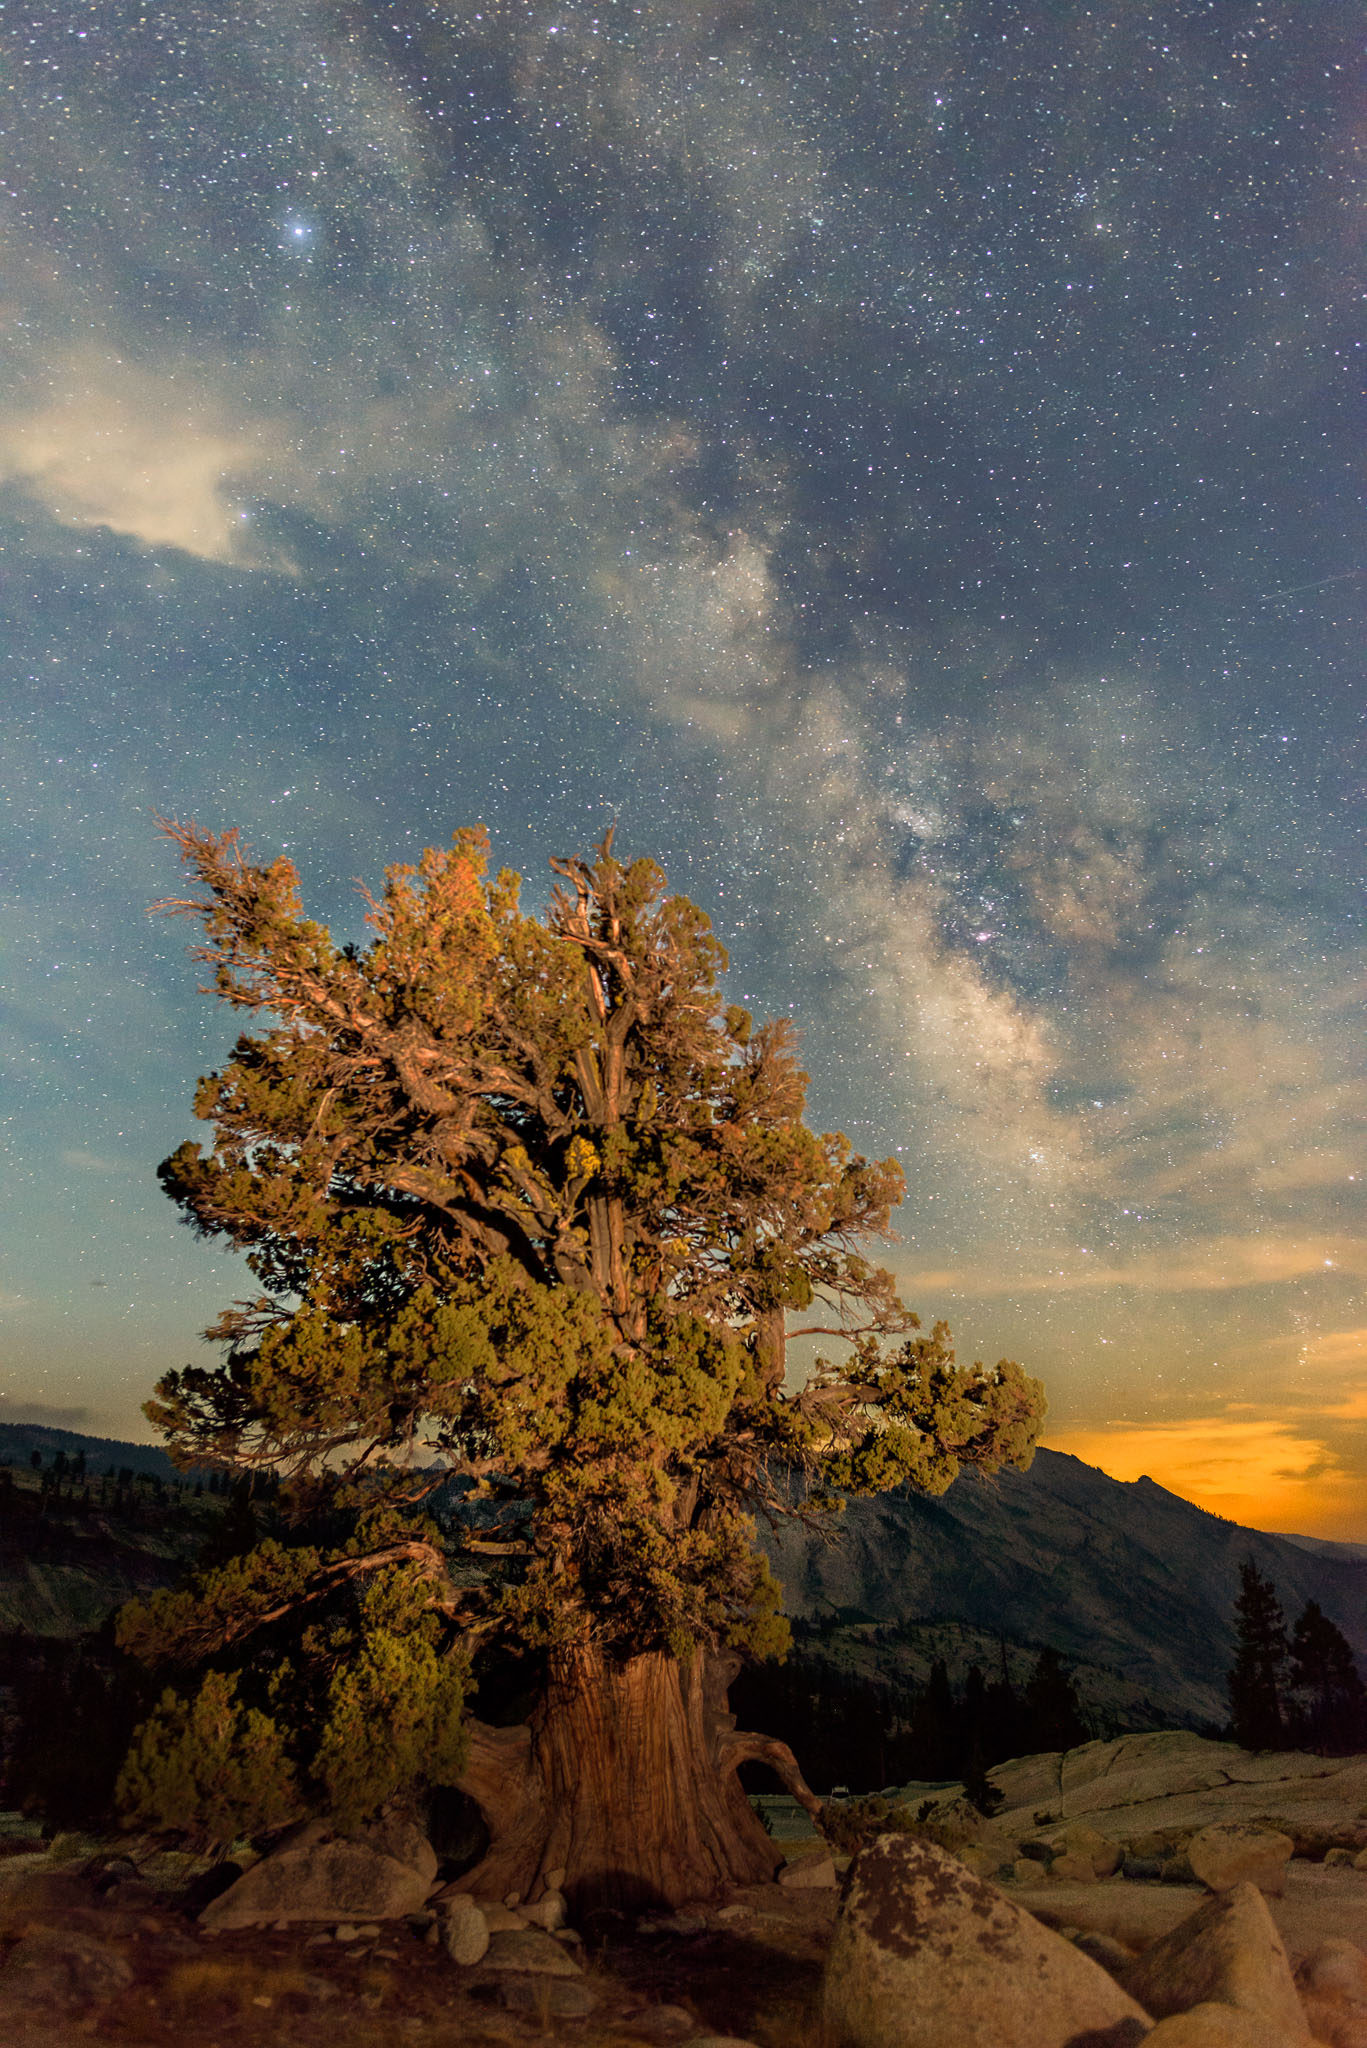 Juniper Tree and Milkyway after Moonrise – Juniper Tree and Milkyway after Moonrise – Blue, Juniper, Milkyway, Moon, Night, Olmsted Point, Stars, Tree, Western Juniper, Yosemite, Yosemite National Park